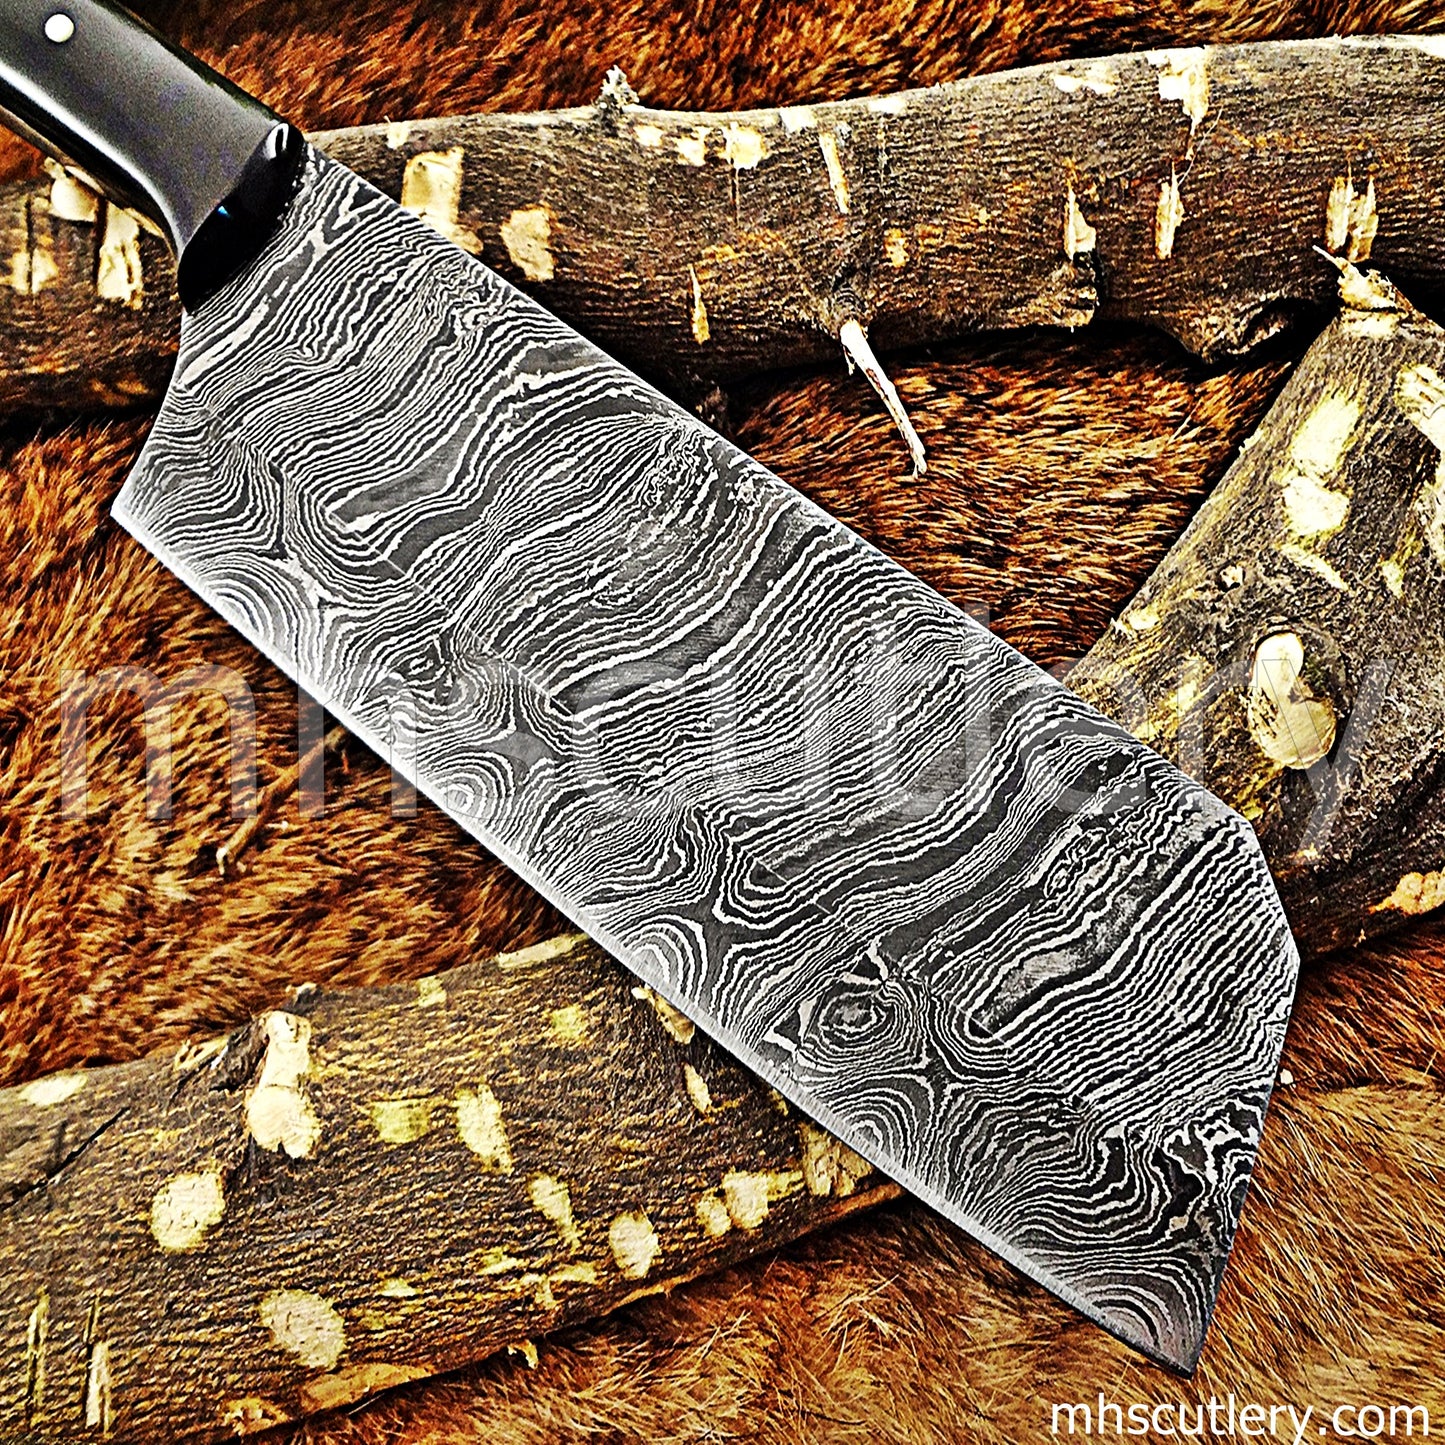 Custom Handmade Damascus Steel Meat Cleaver | mhscutlery